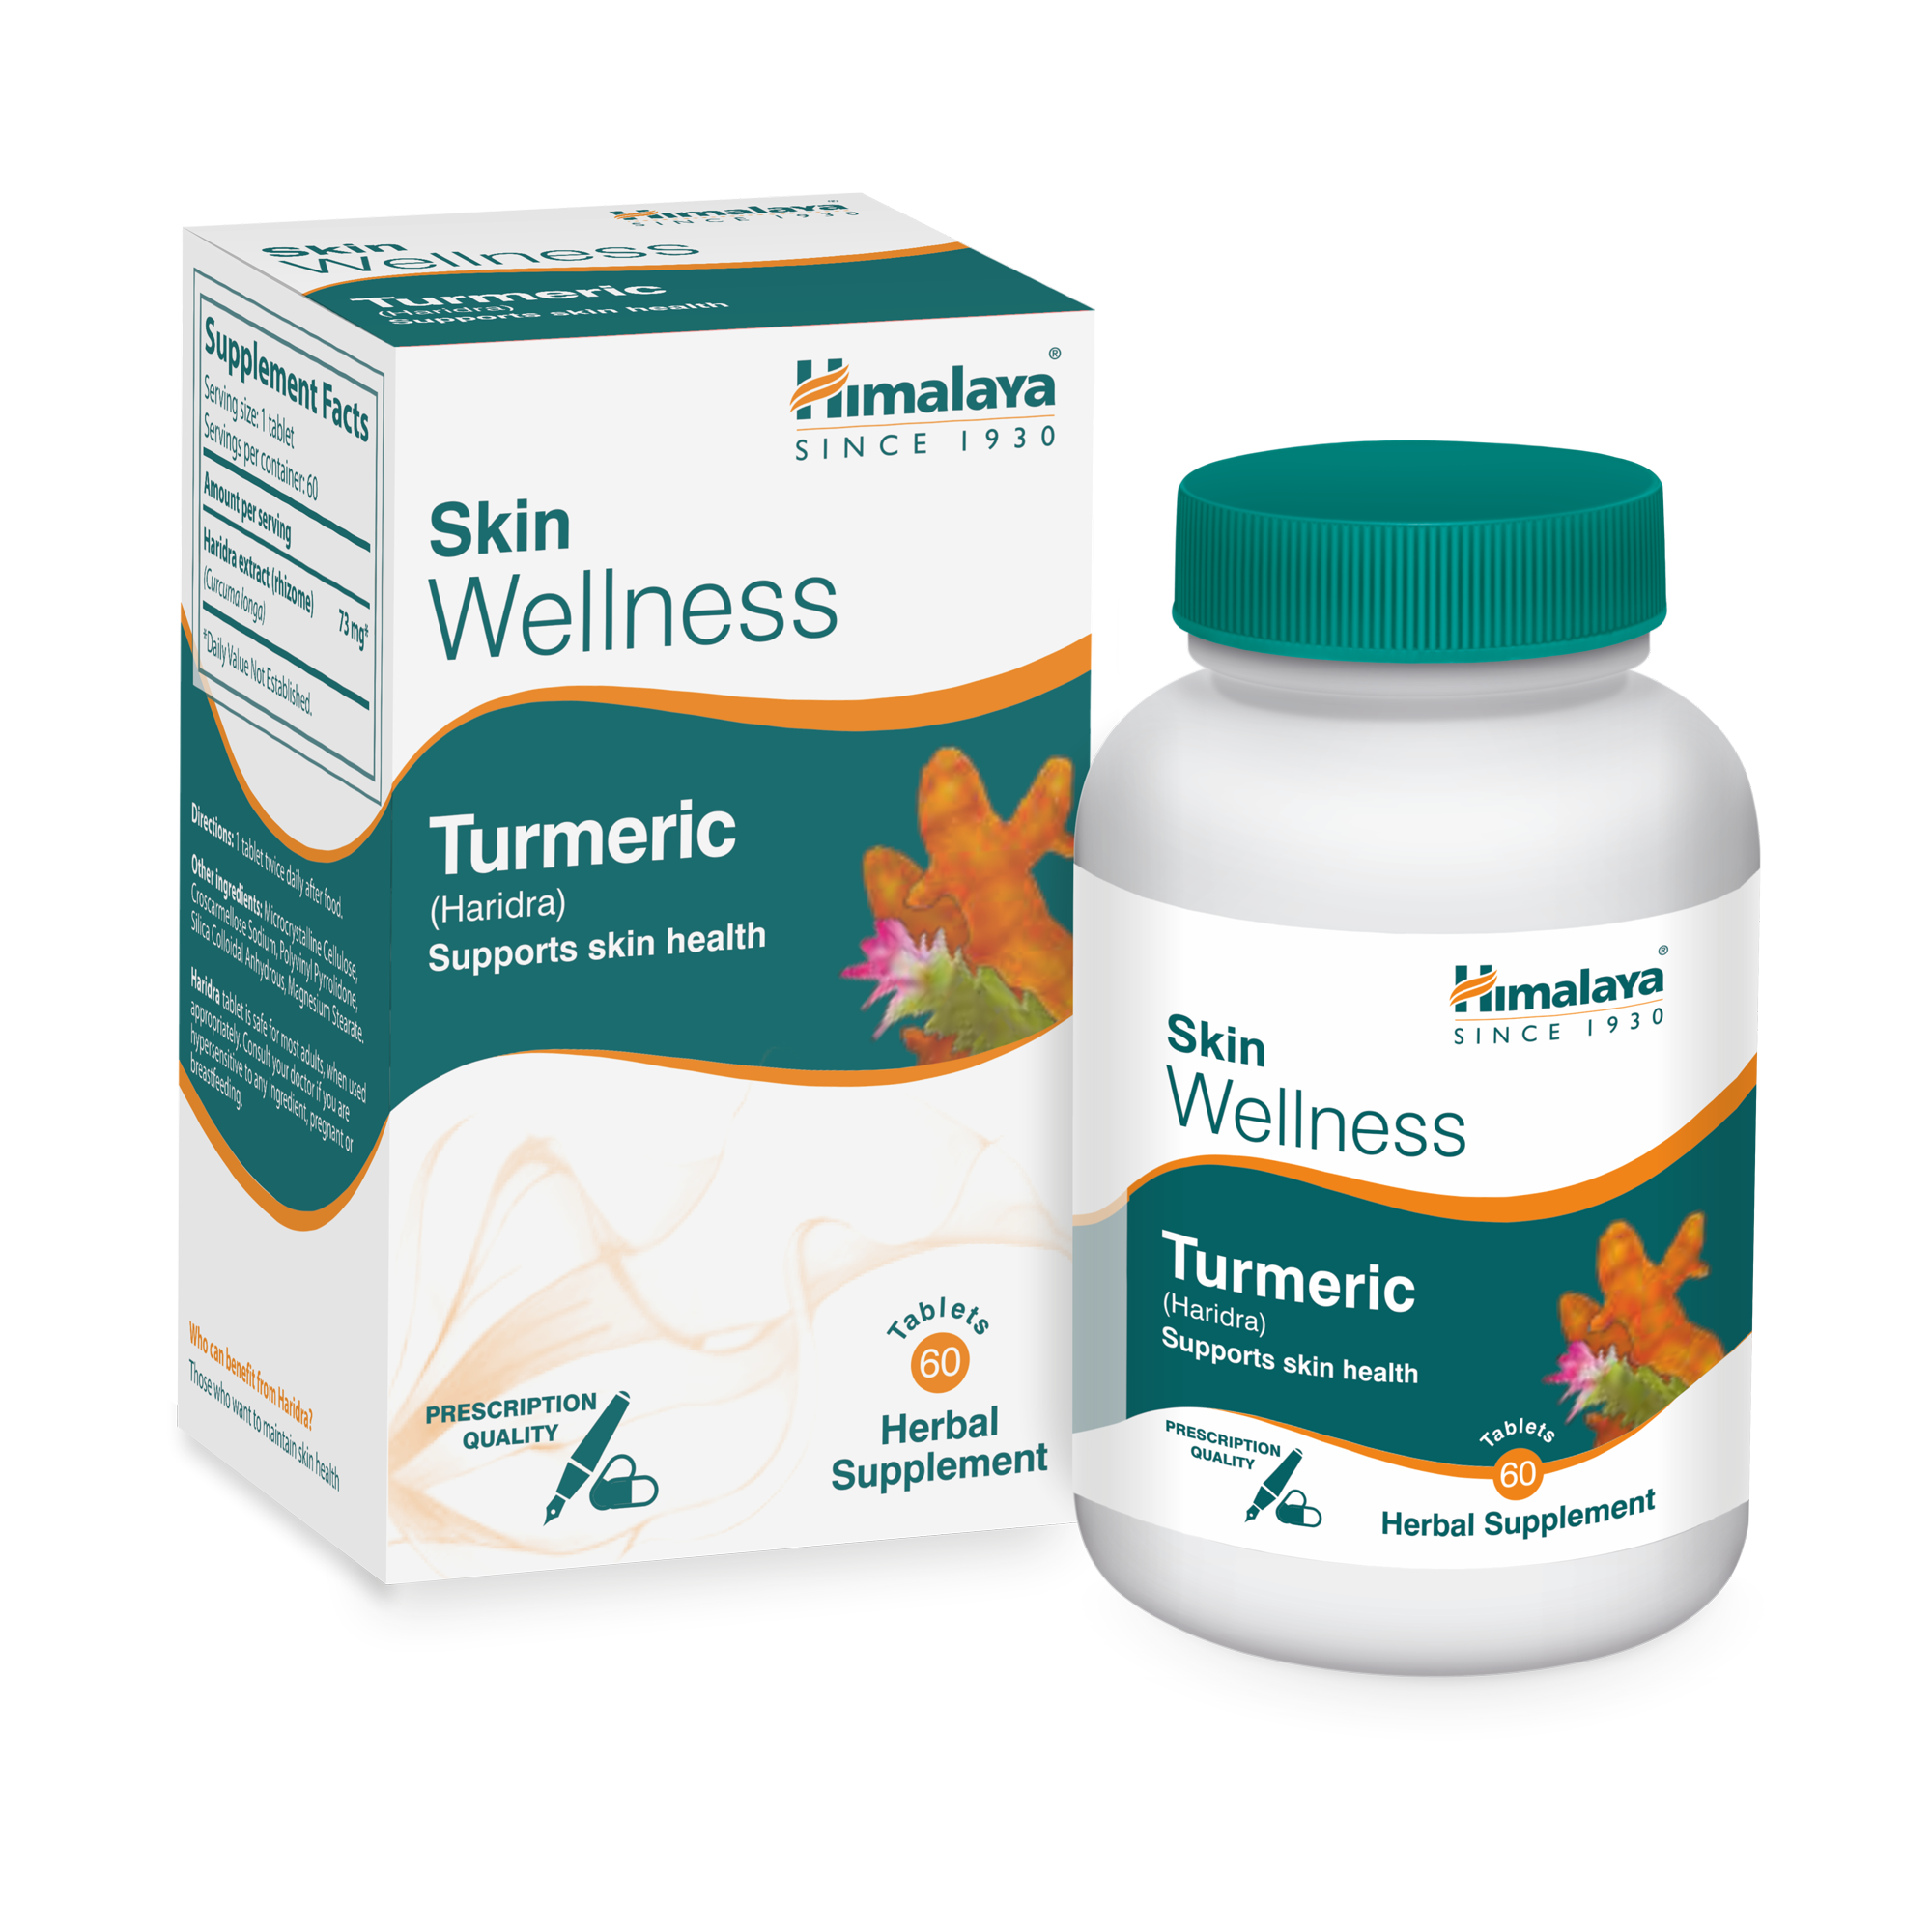 Himalaya Turmeric (Haridra) Tablets 60's - Supports Skin Health